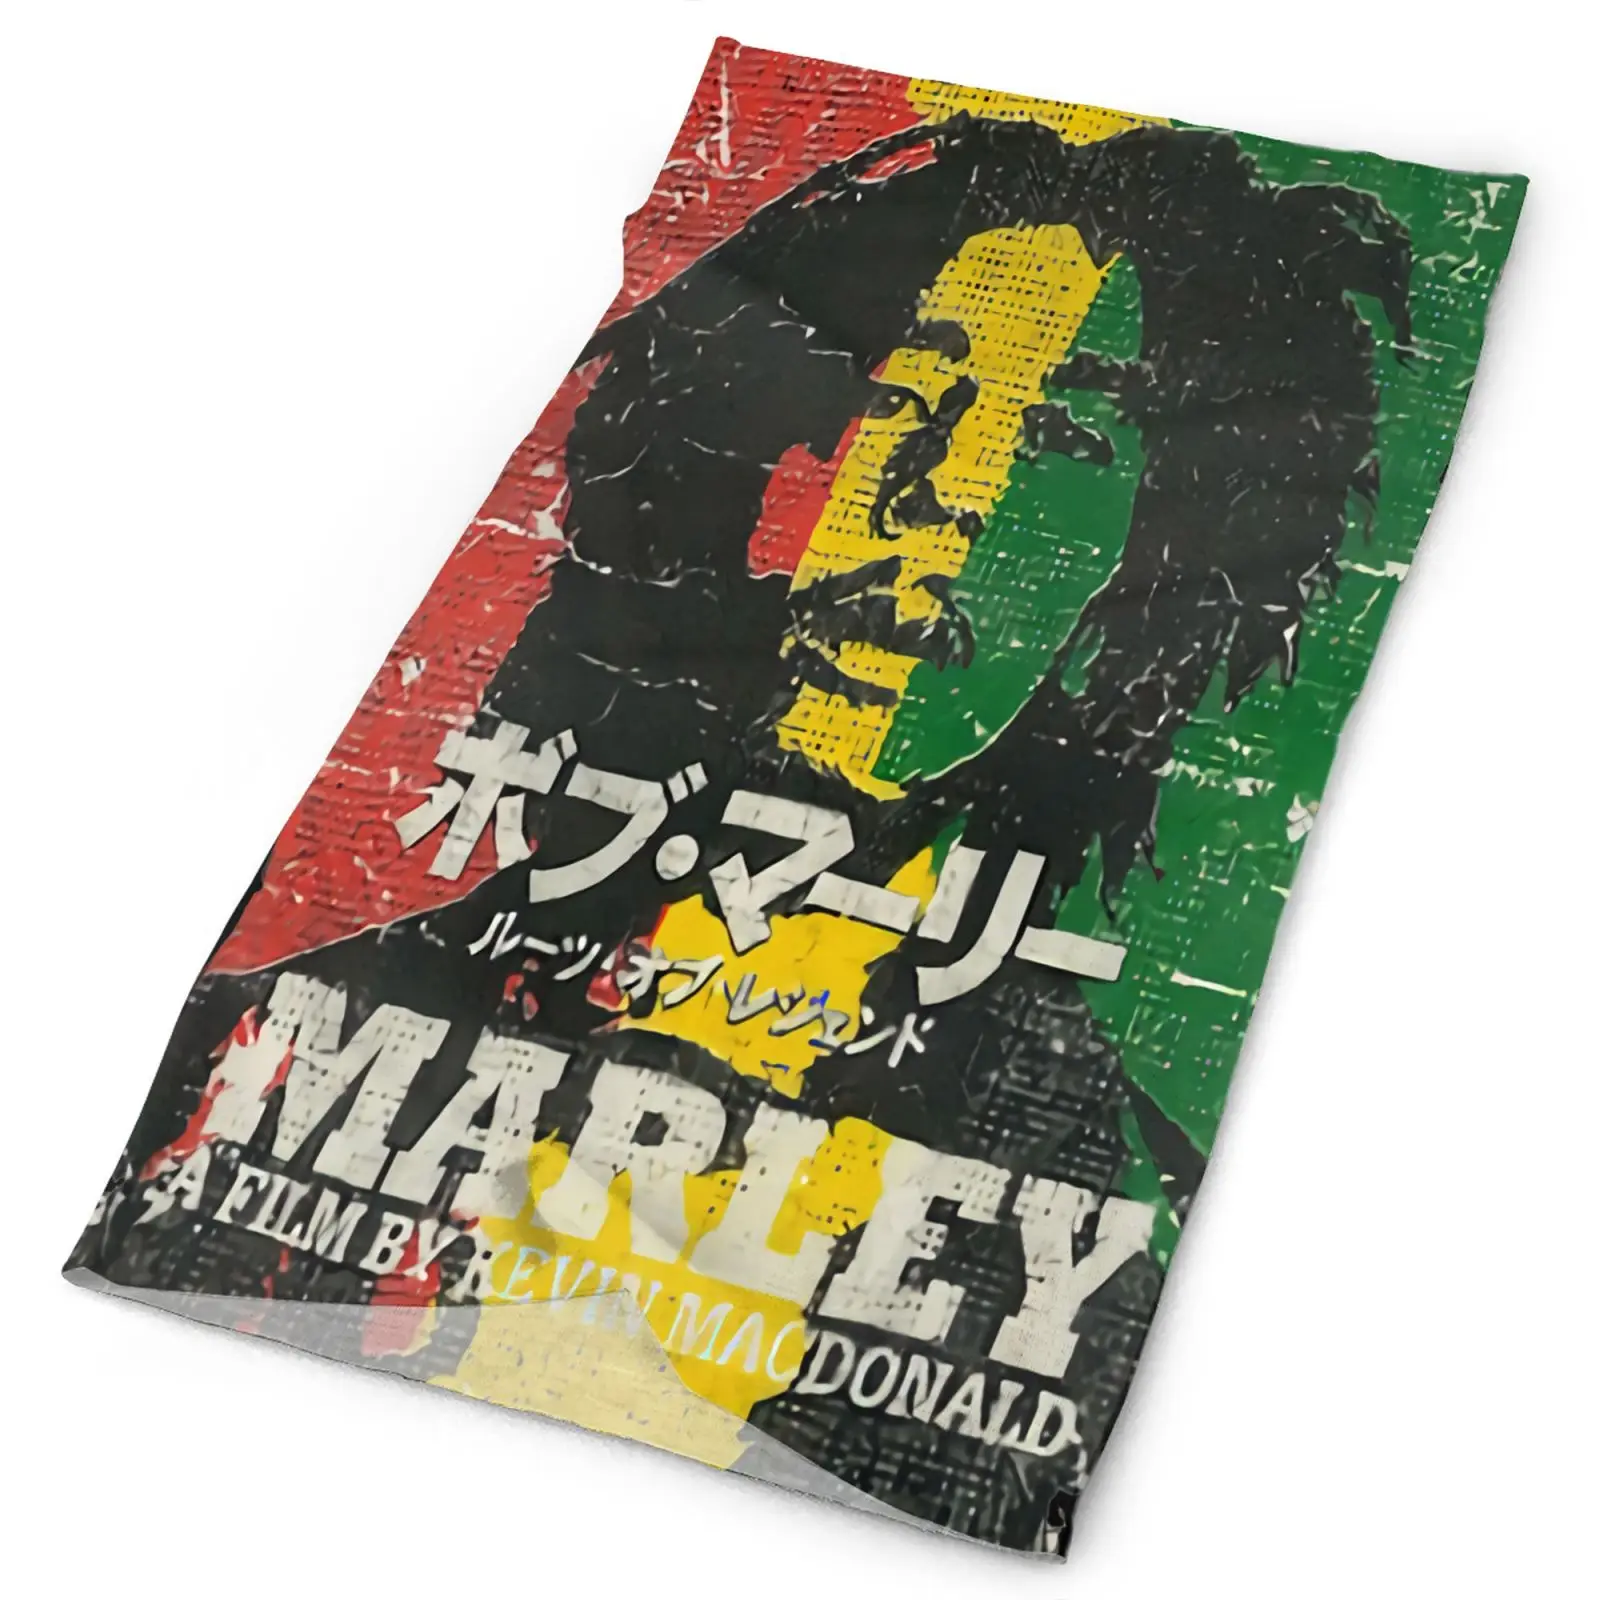 

Мужская бандана Bob Marley Rasta Reggae One Love, походный шарф, маска для мужчин, охотничий мужской шарф, обогреватель для мужчин, ткань для туризма